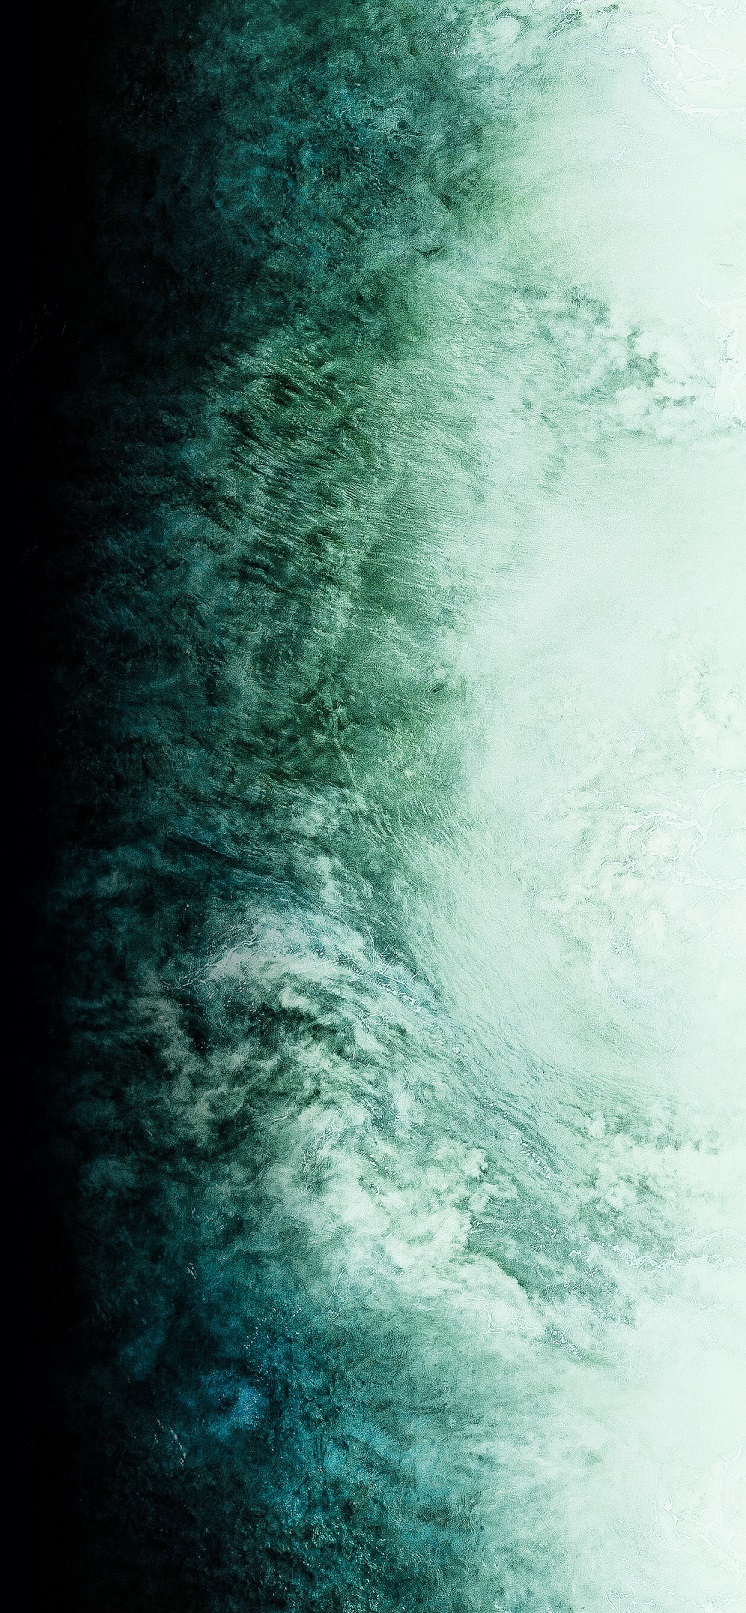 iPhone-11-Pro-Max-wallpaper-inspired-green-mist-ar72014